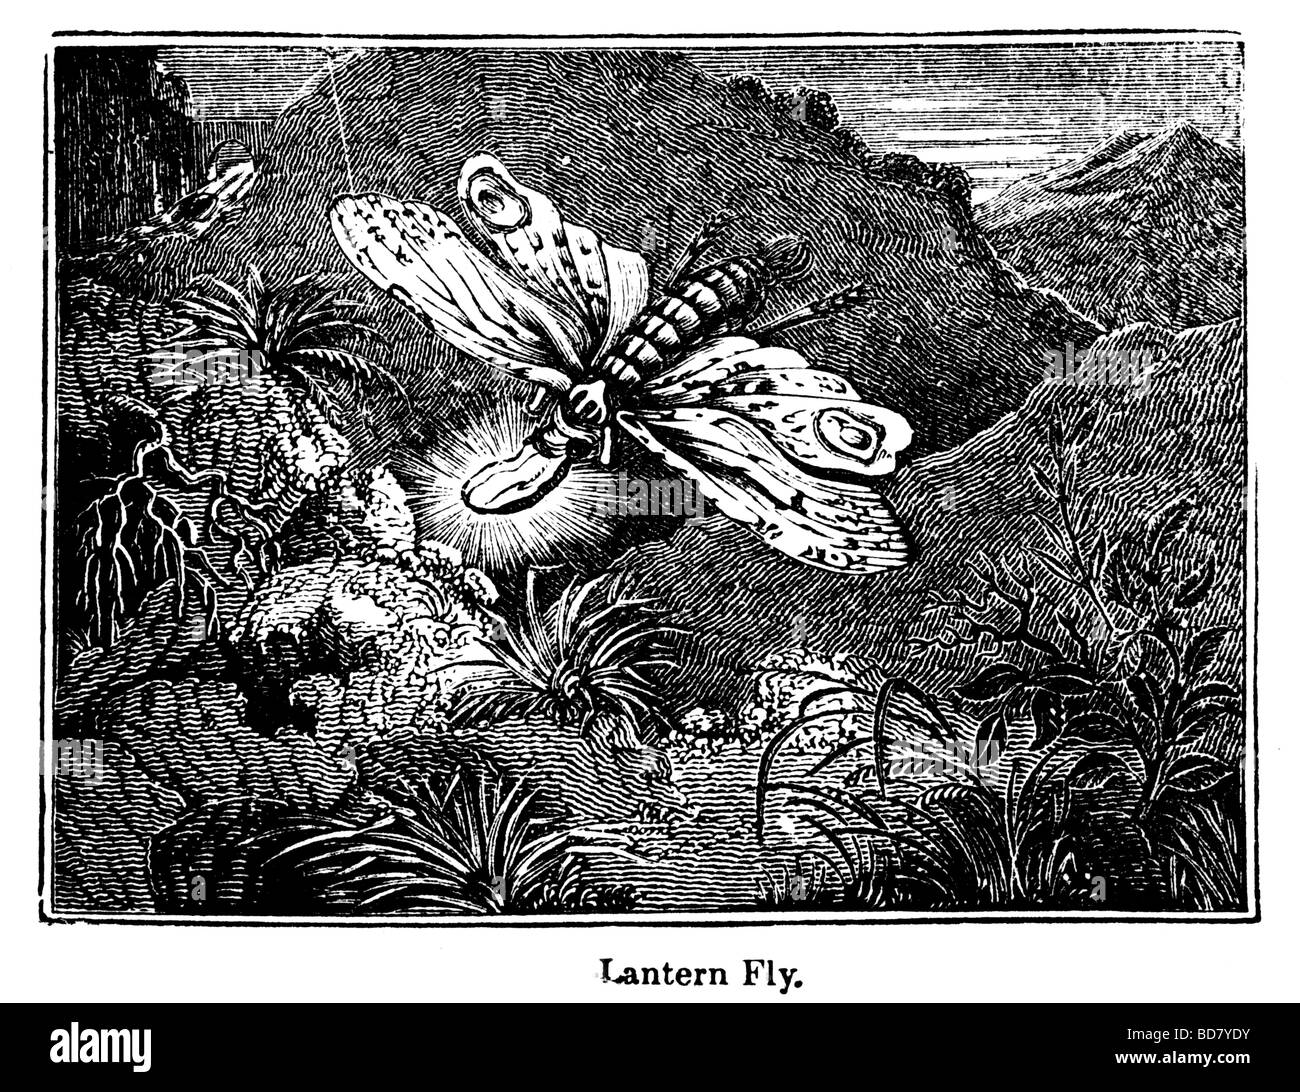 Lantern fly Stockfoto